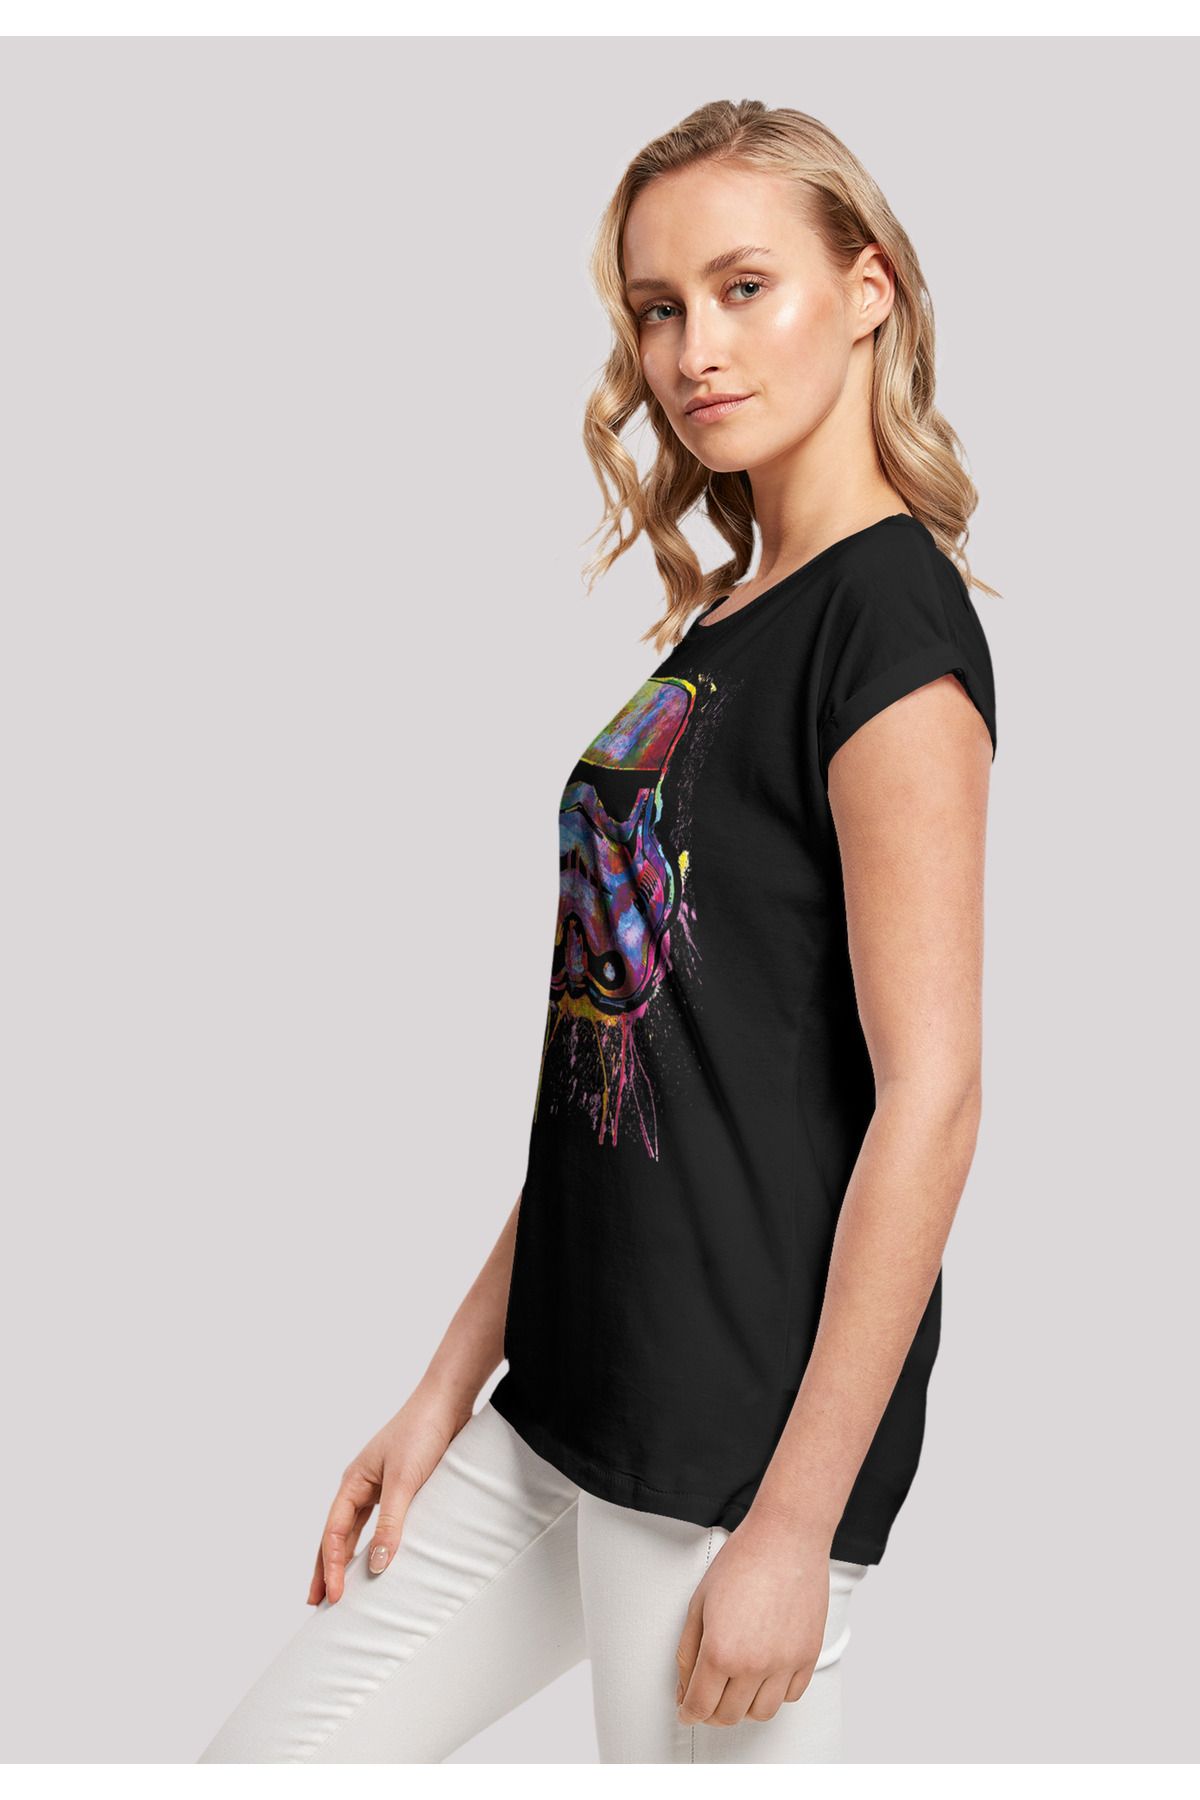 Trendyol - F4NT4STIC verlängerter Stormtrooper Paint mit Splats Schulter Damen-T-Shirt Damen mit